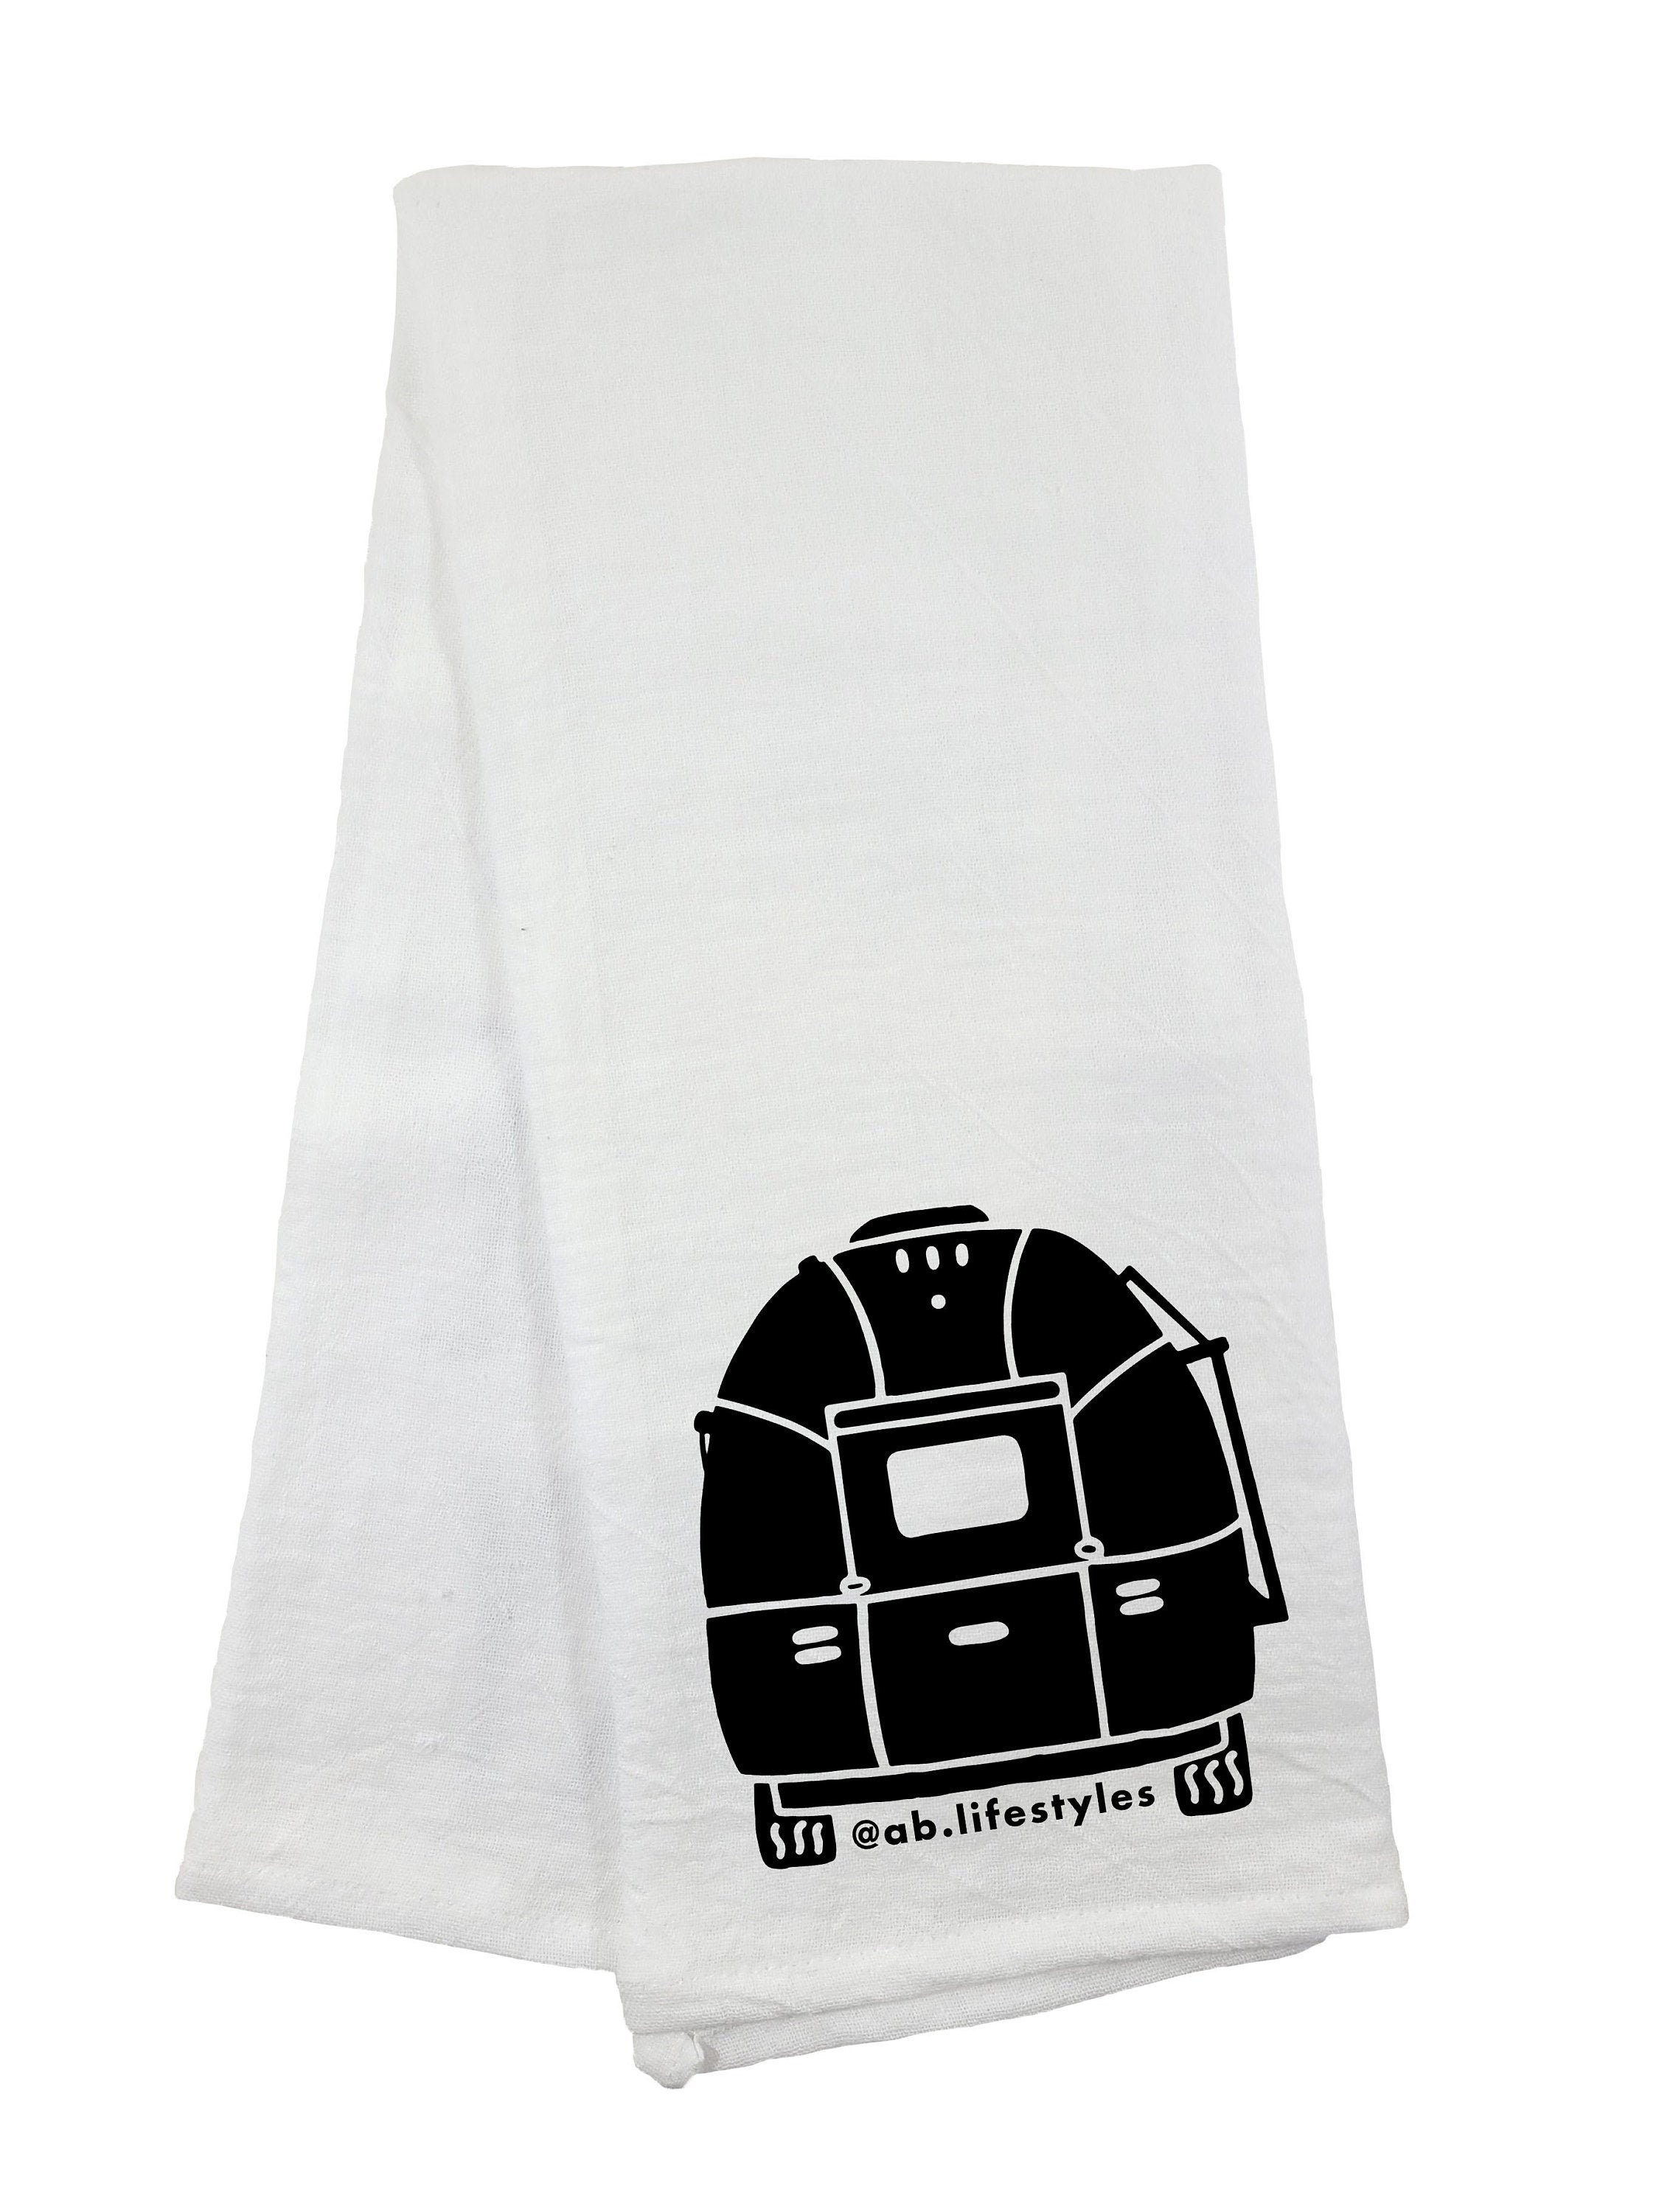 Camper Dish Towels – Gingersnap Designs